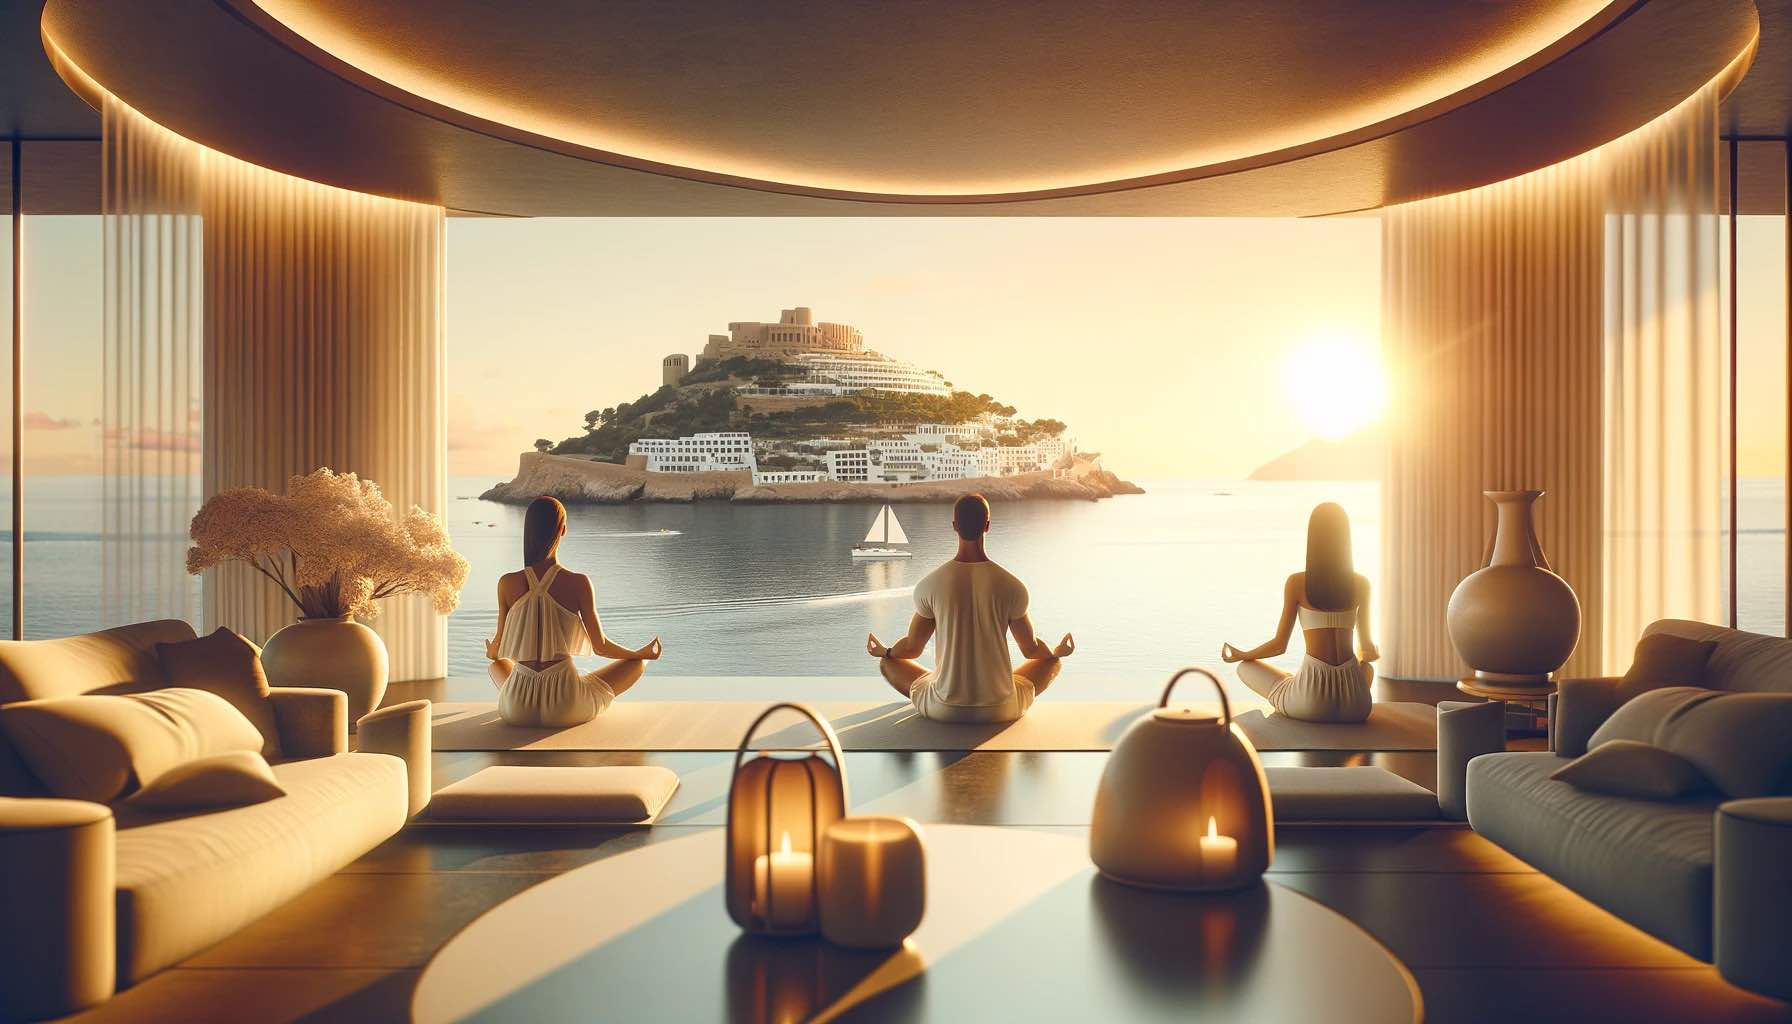 Mindful Travel turismo de Bienestar Ibiza